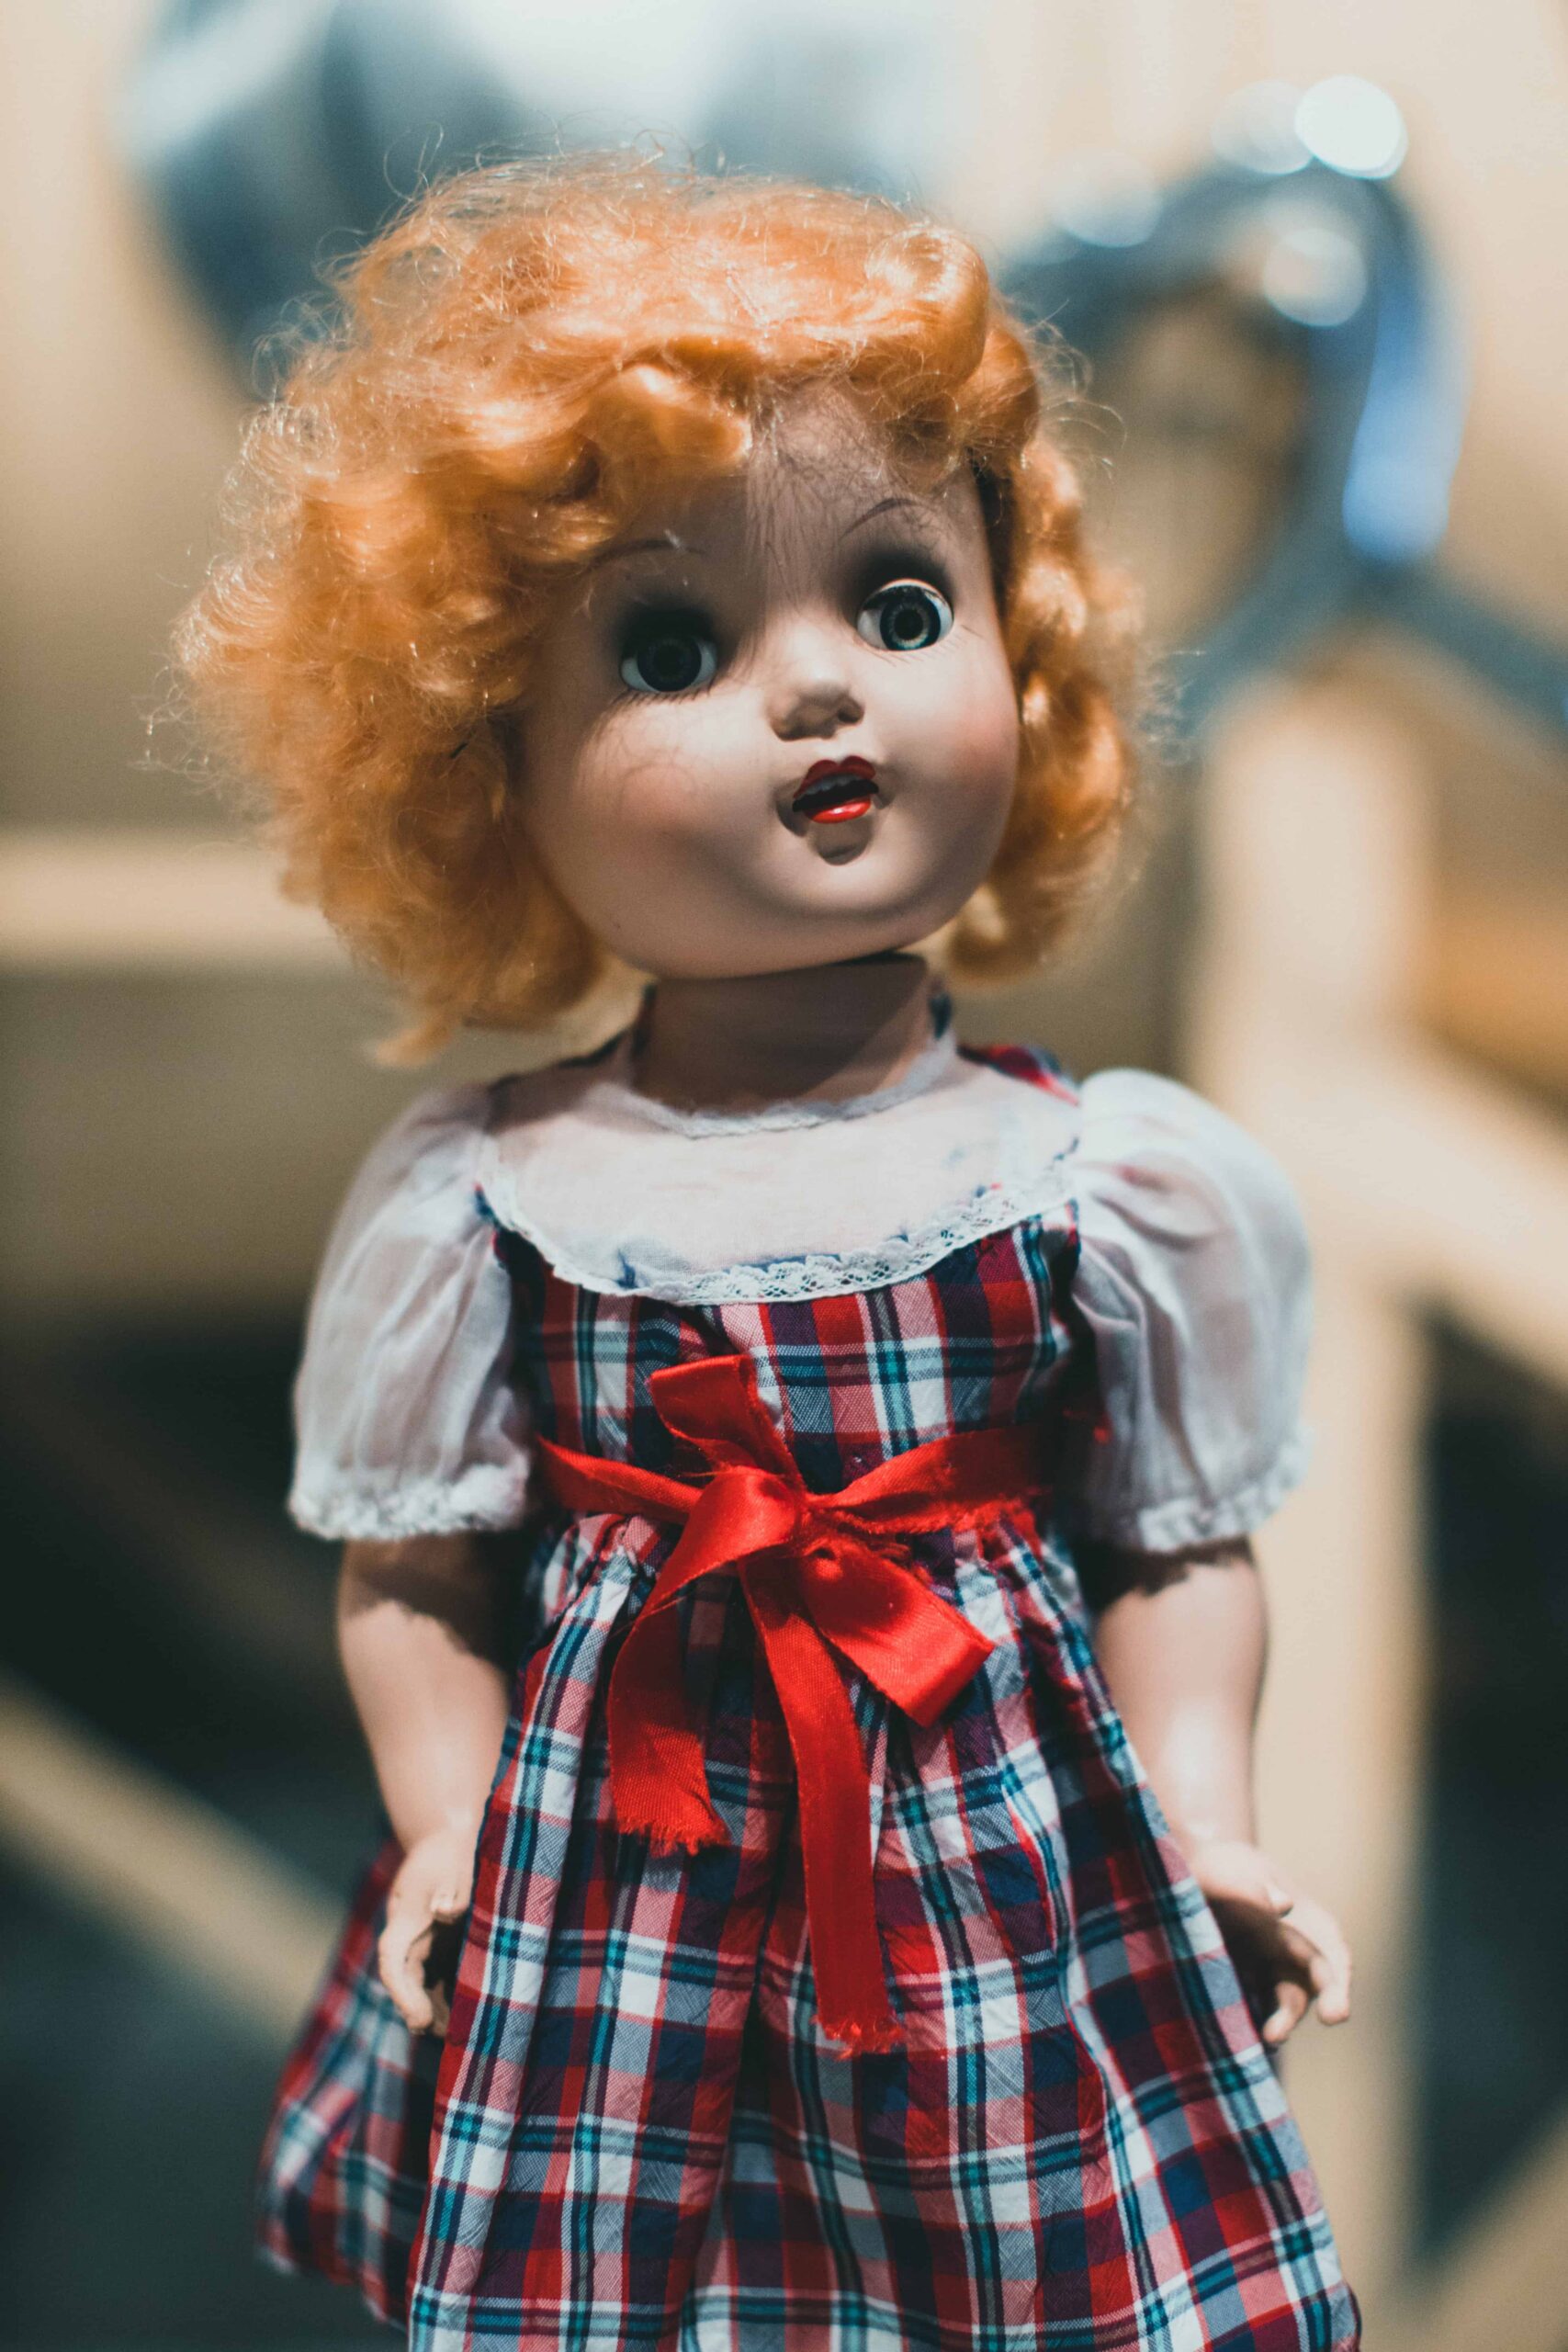 Doll DP for Instagram